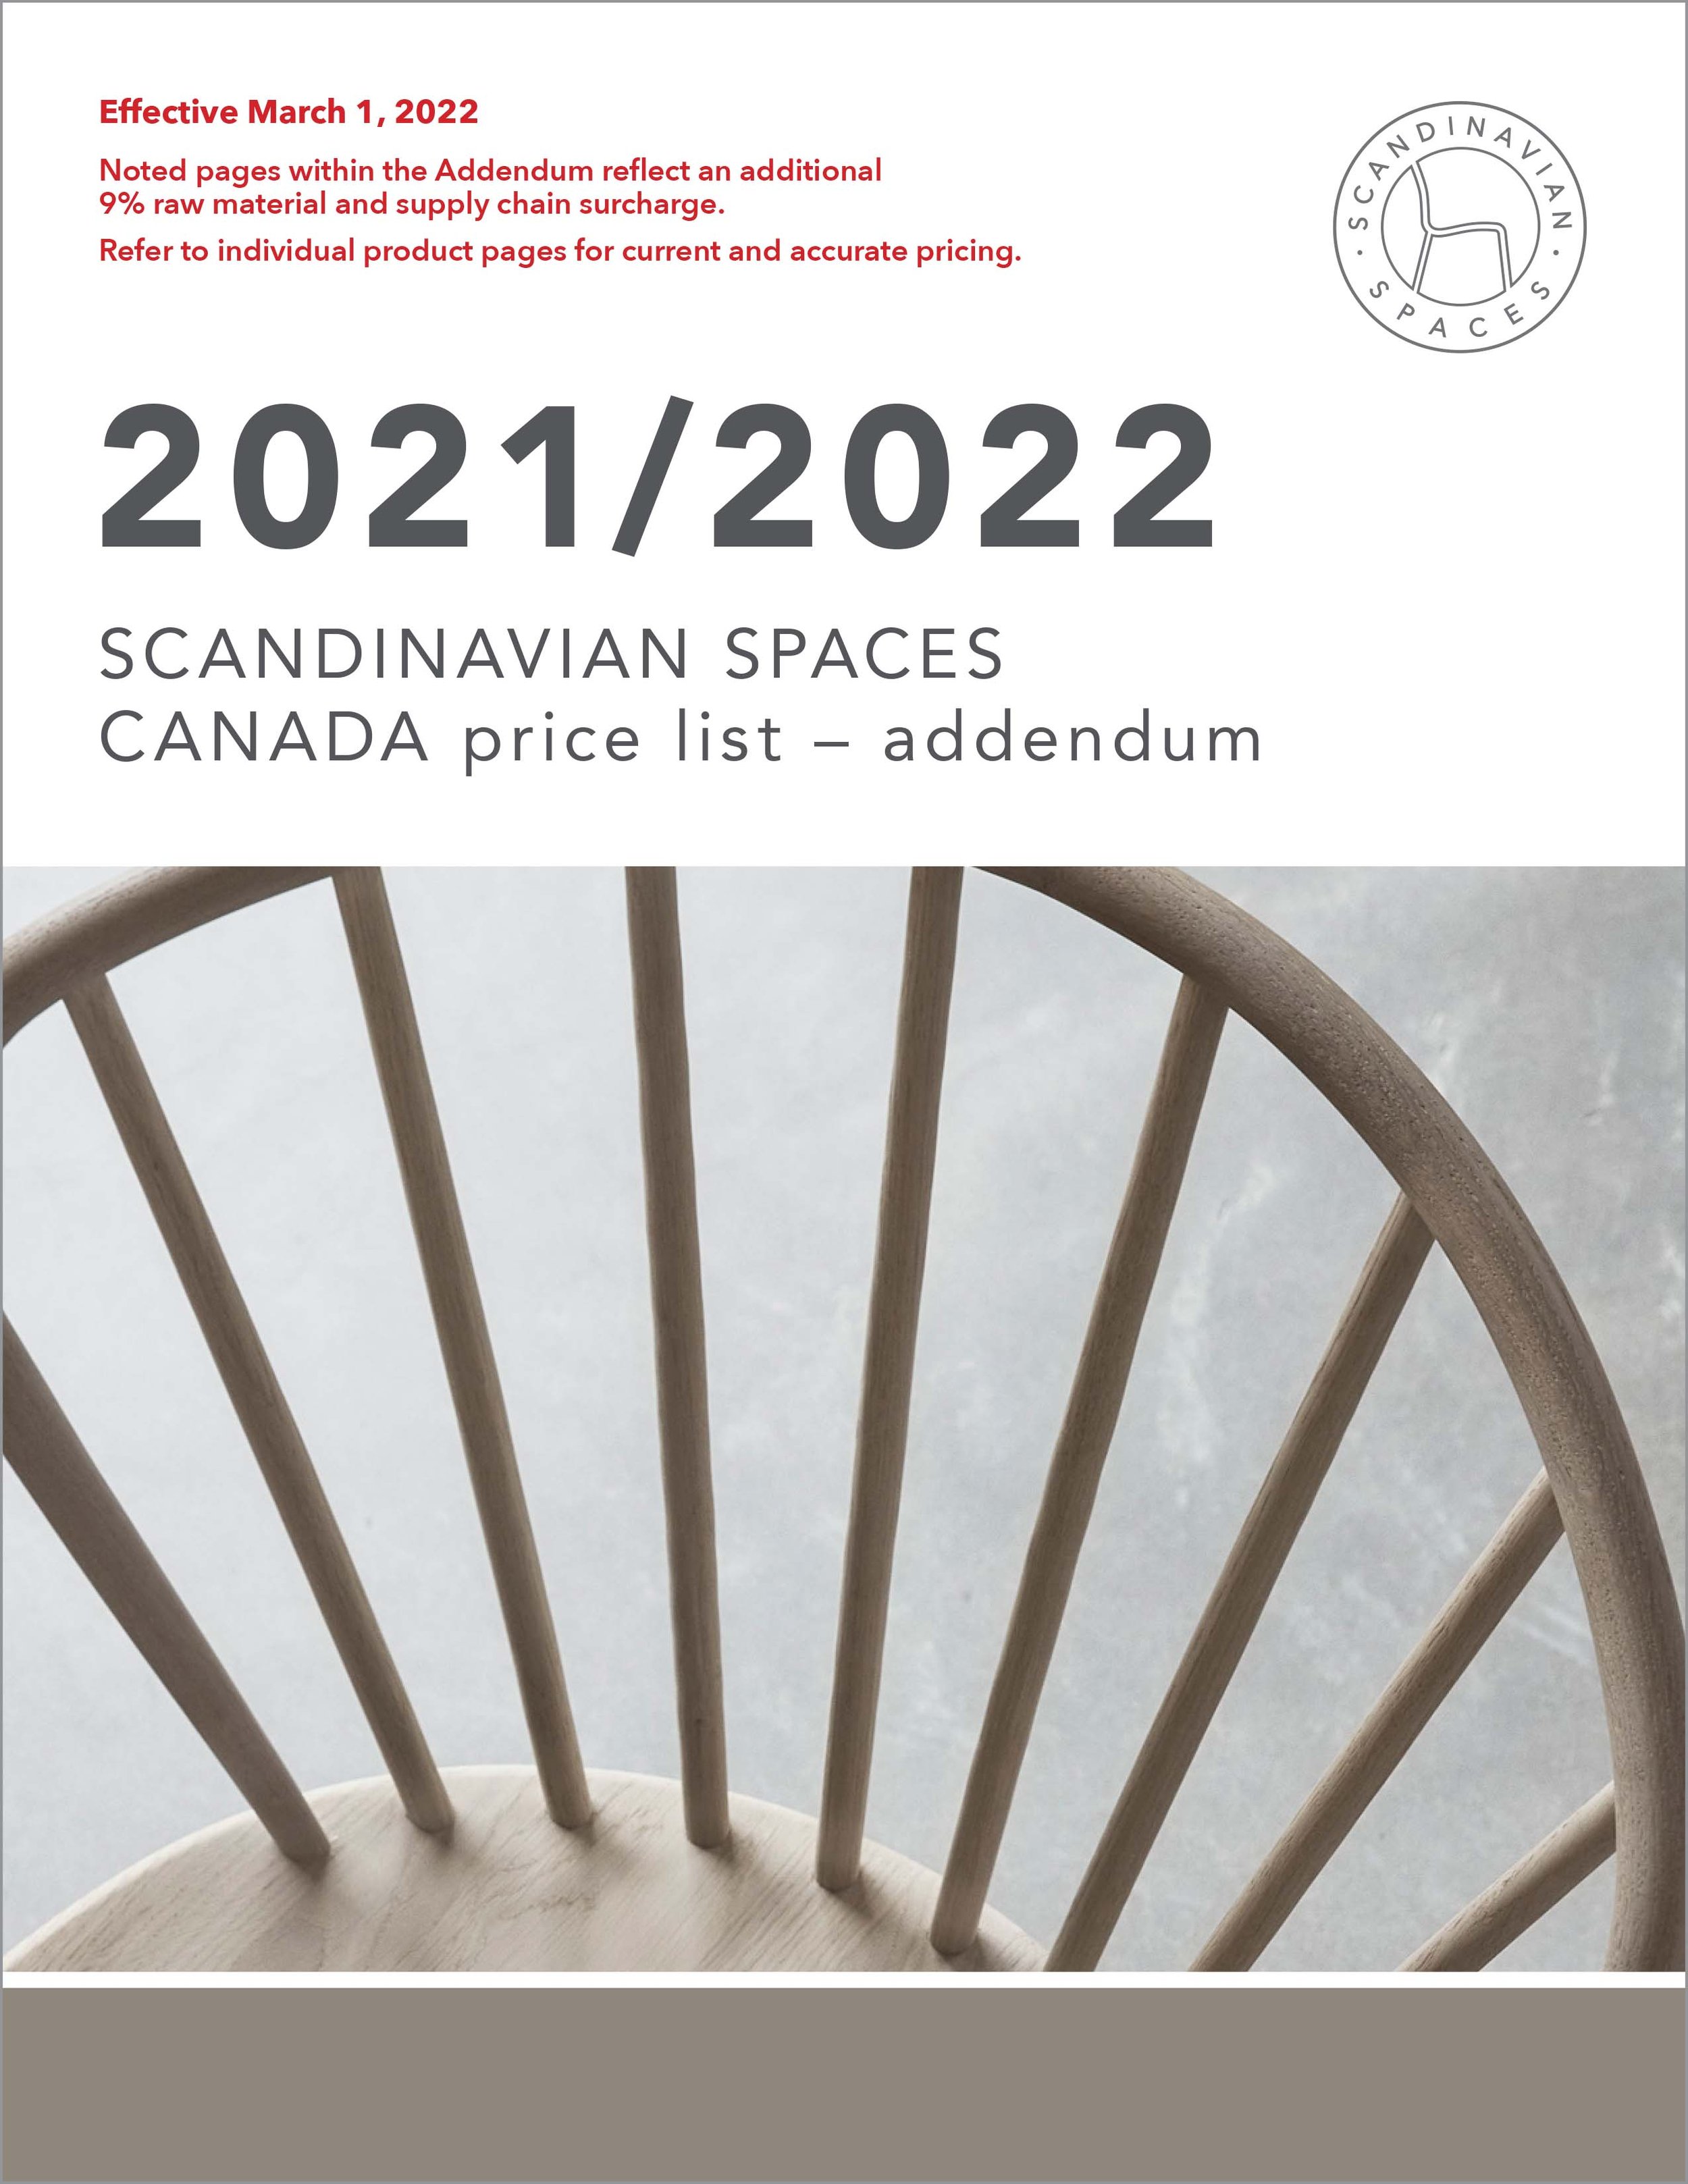 PriceList_Addendum_ScandinavianSpaces_Canada2022.jpg